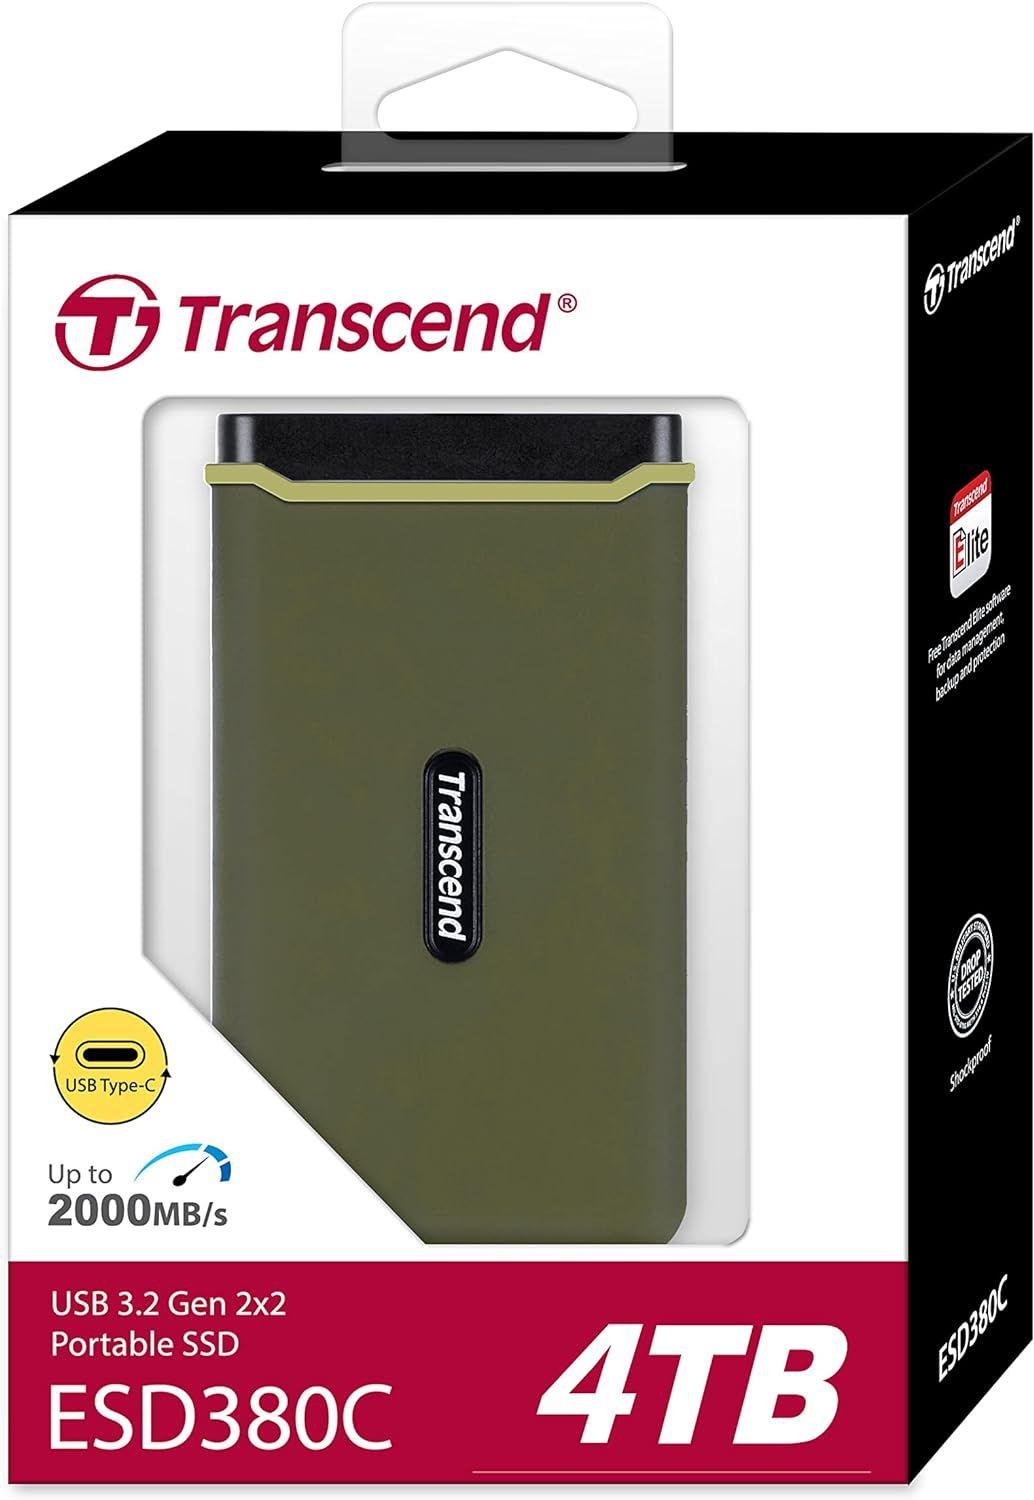 Transcend ESD380C 4TB USB 3.2 Gen 2 Type-C Portable SSD Price Nepal